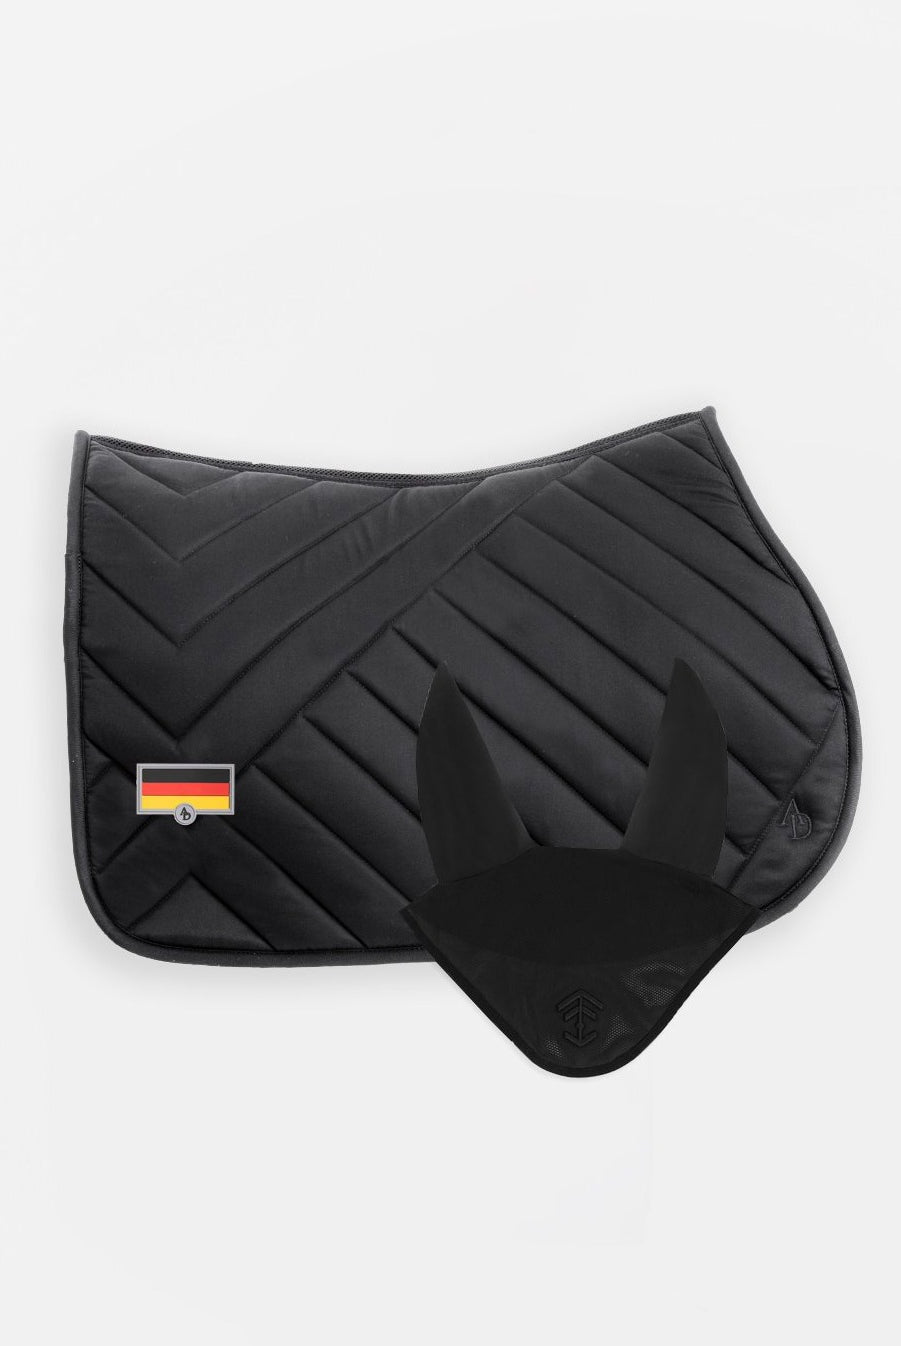 Germany Saddle Pad Badge